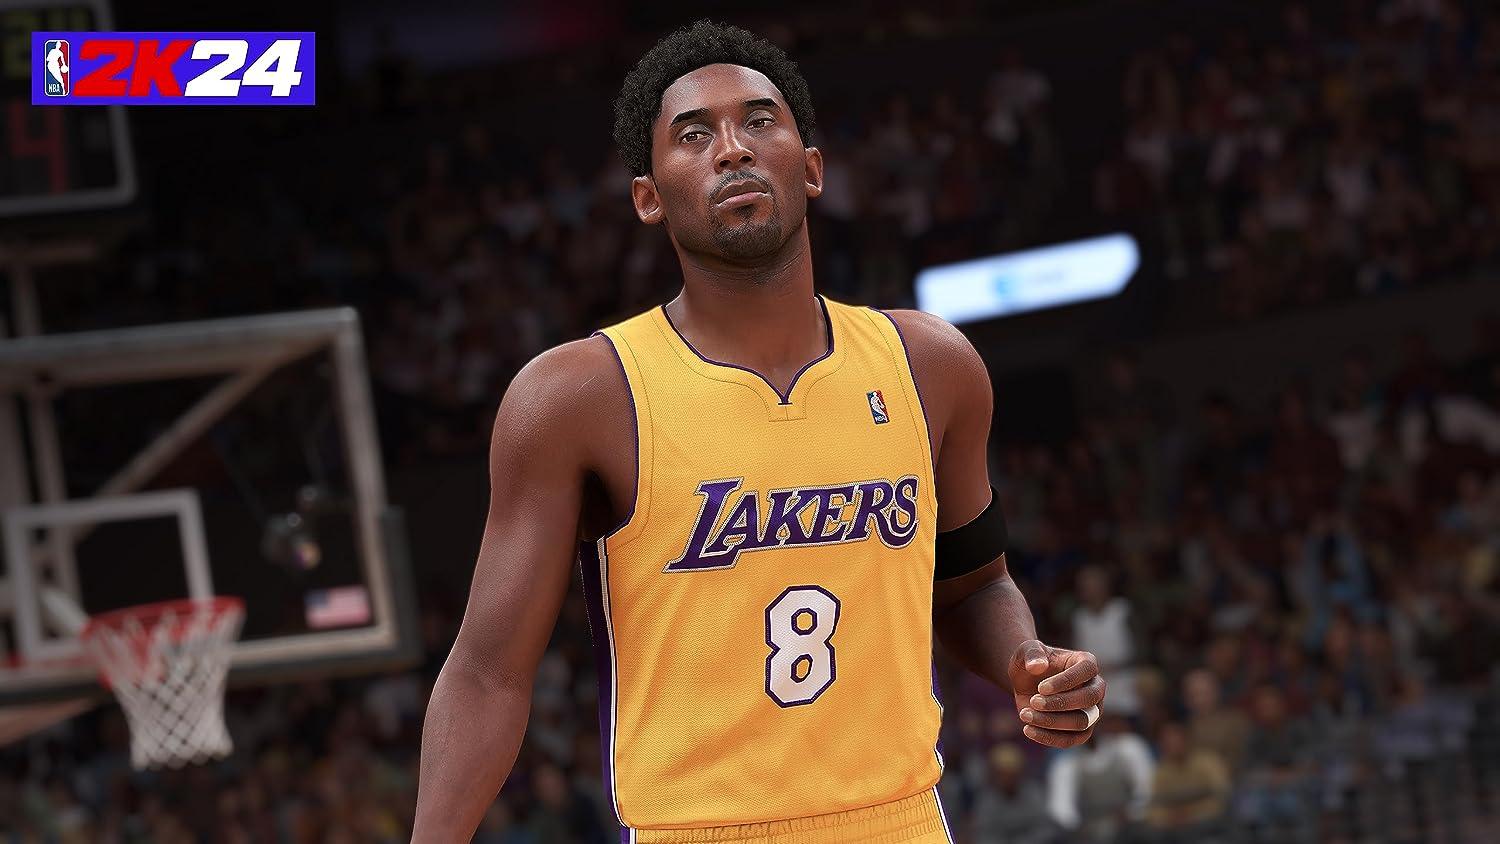 NBA 2K24 - Kobe Bryant Edition (Xbox Series X) (Xbox One) - GameStore.mt | Powered by Flutisat